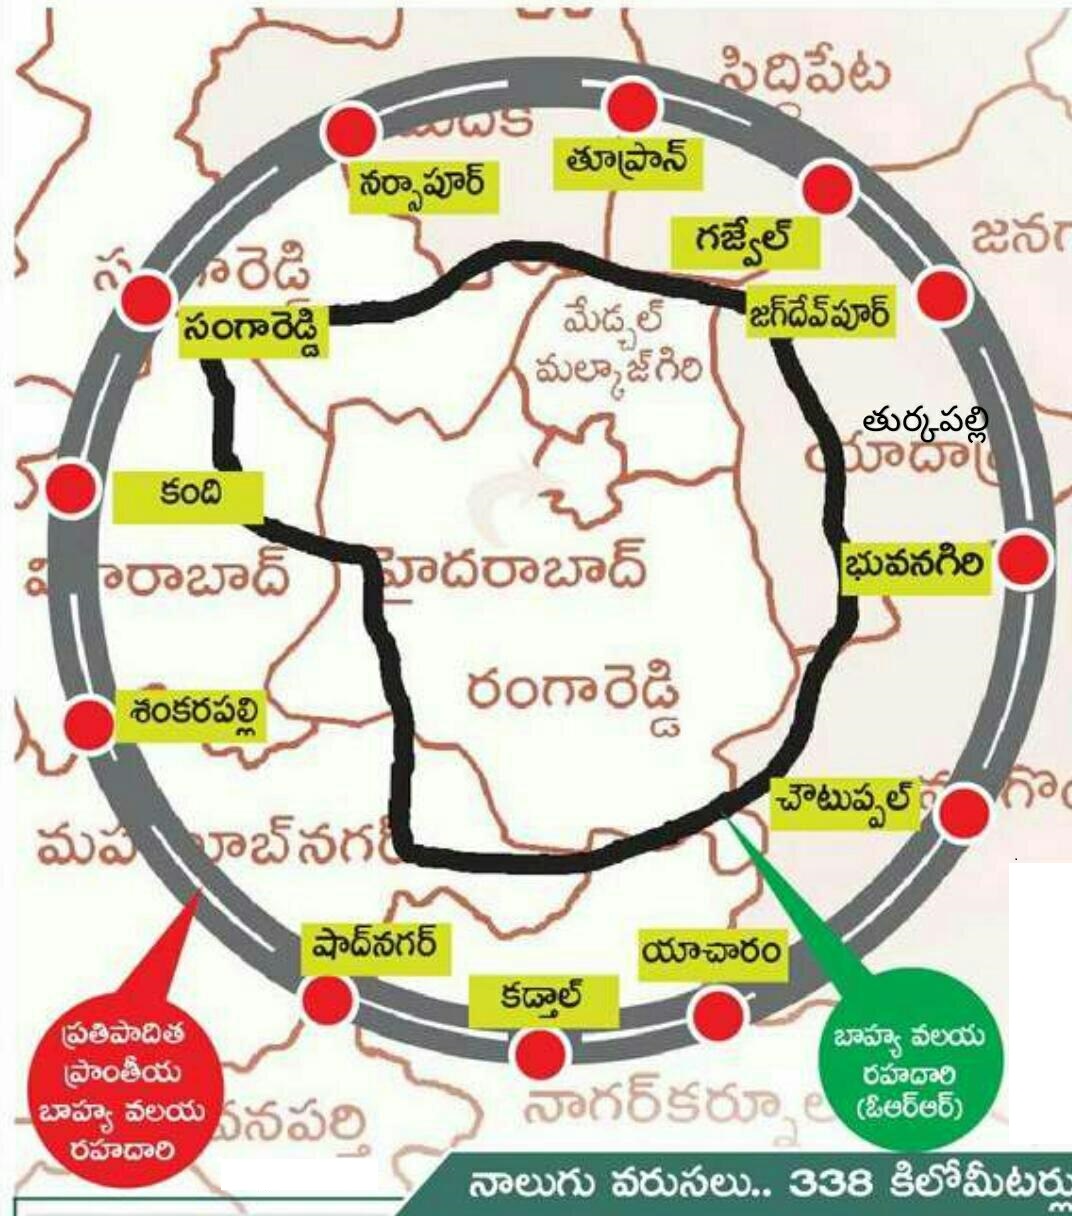 Traffic regulations on all arterial roads in Hyderabad for Ganesh immersion  on September 28